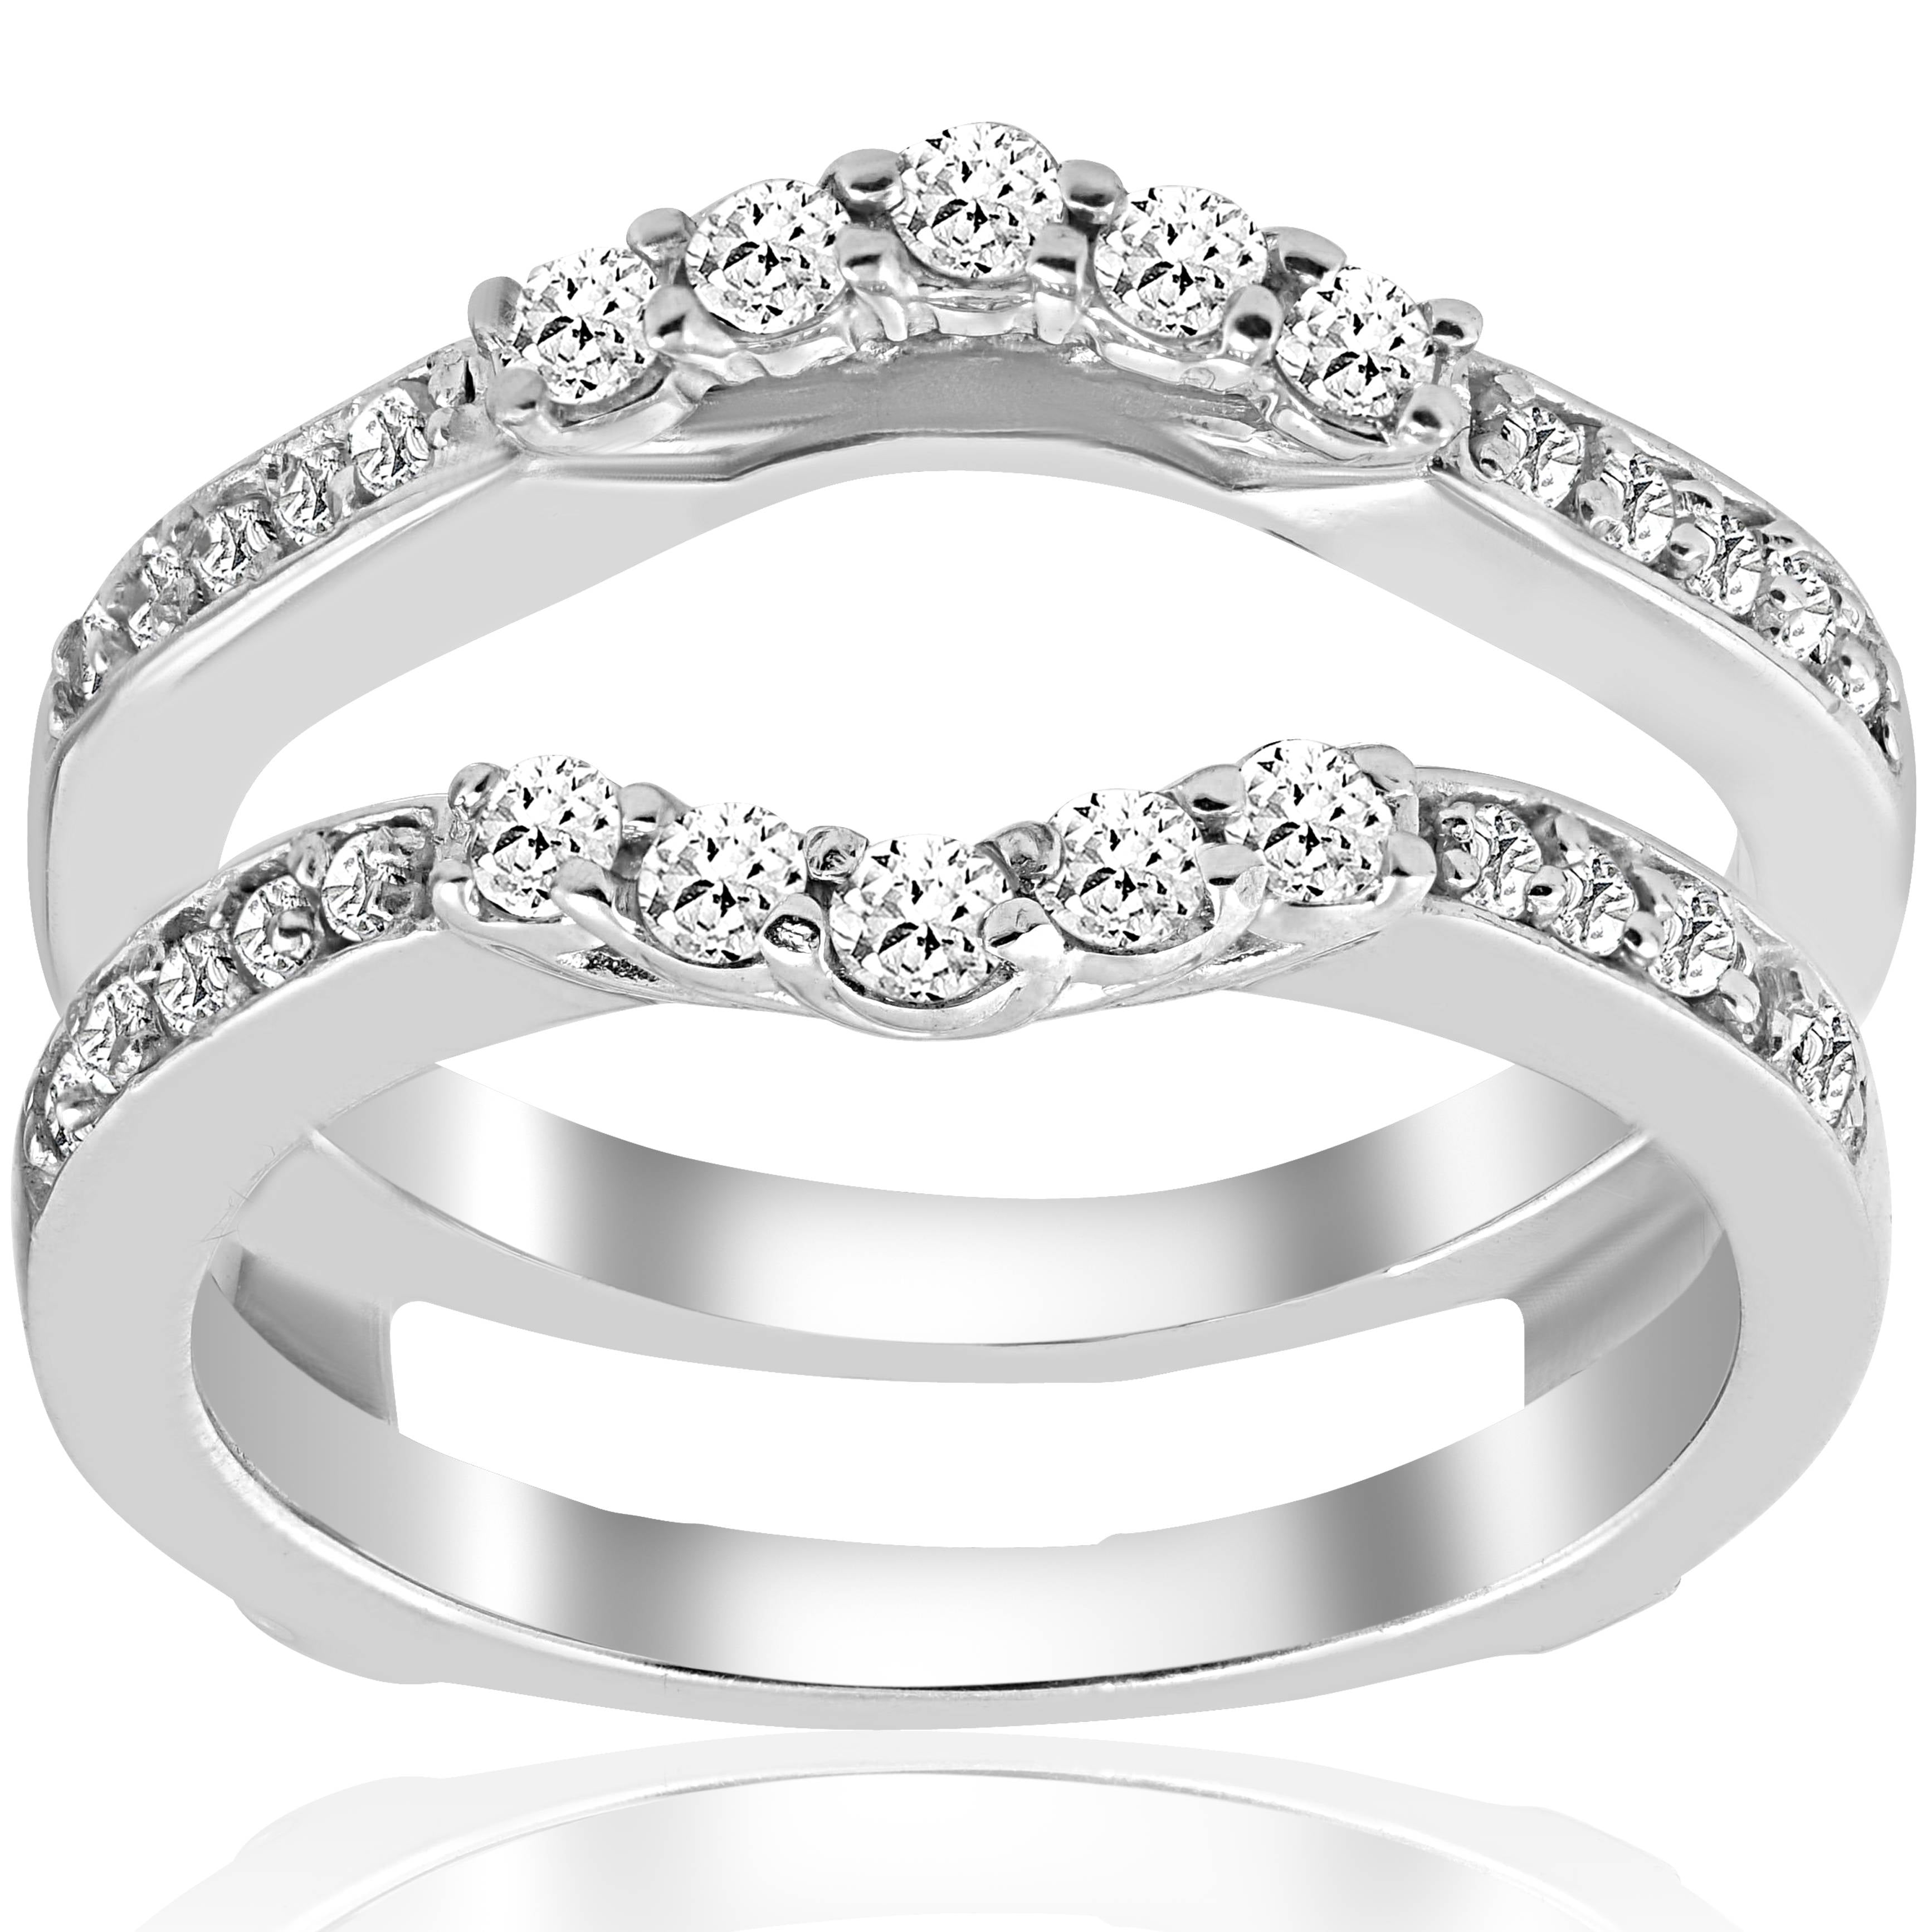 2ct Solitaire Diamonds Ring Guard Women 14k White Gold Finish Wedding Band 10